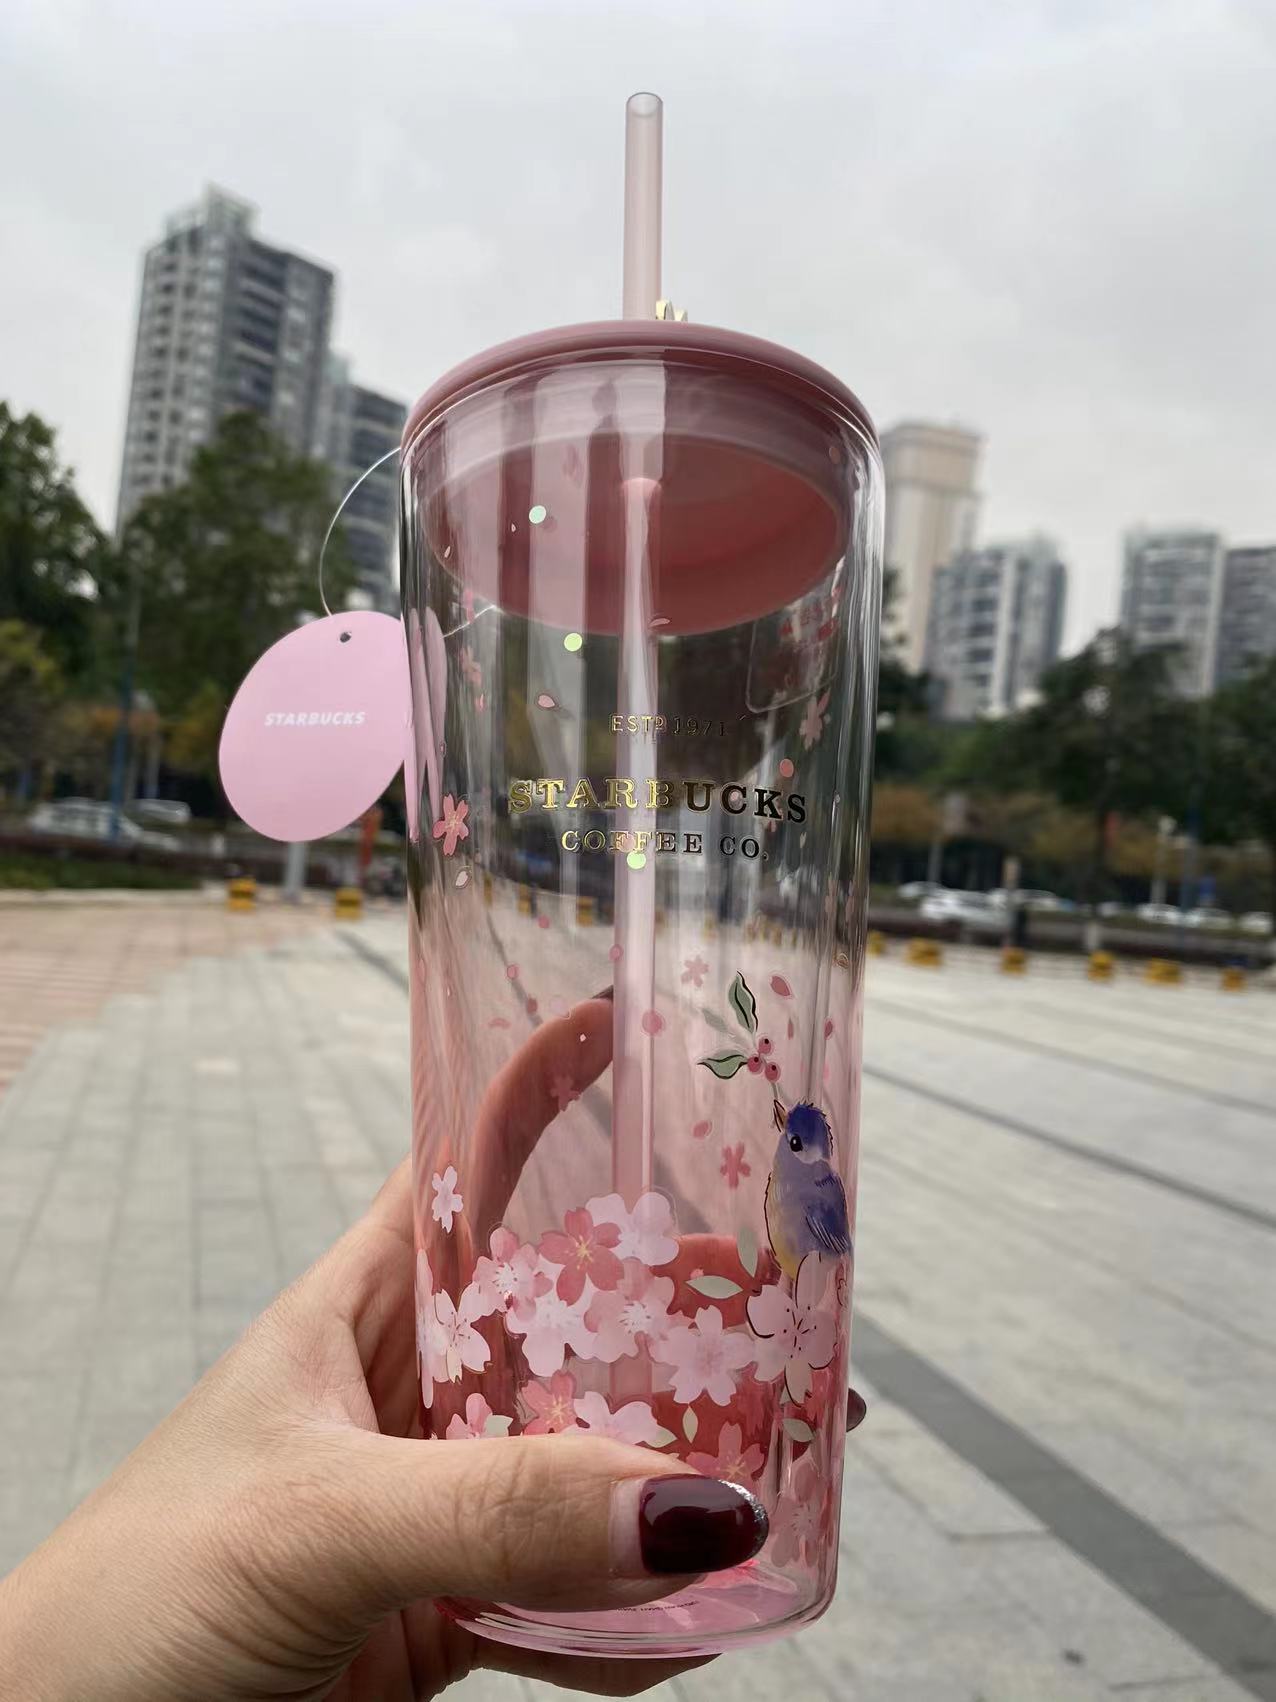 Sale Starbucks 2022 China Sakura 20oz Glass Straw Cup with Straw Topper